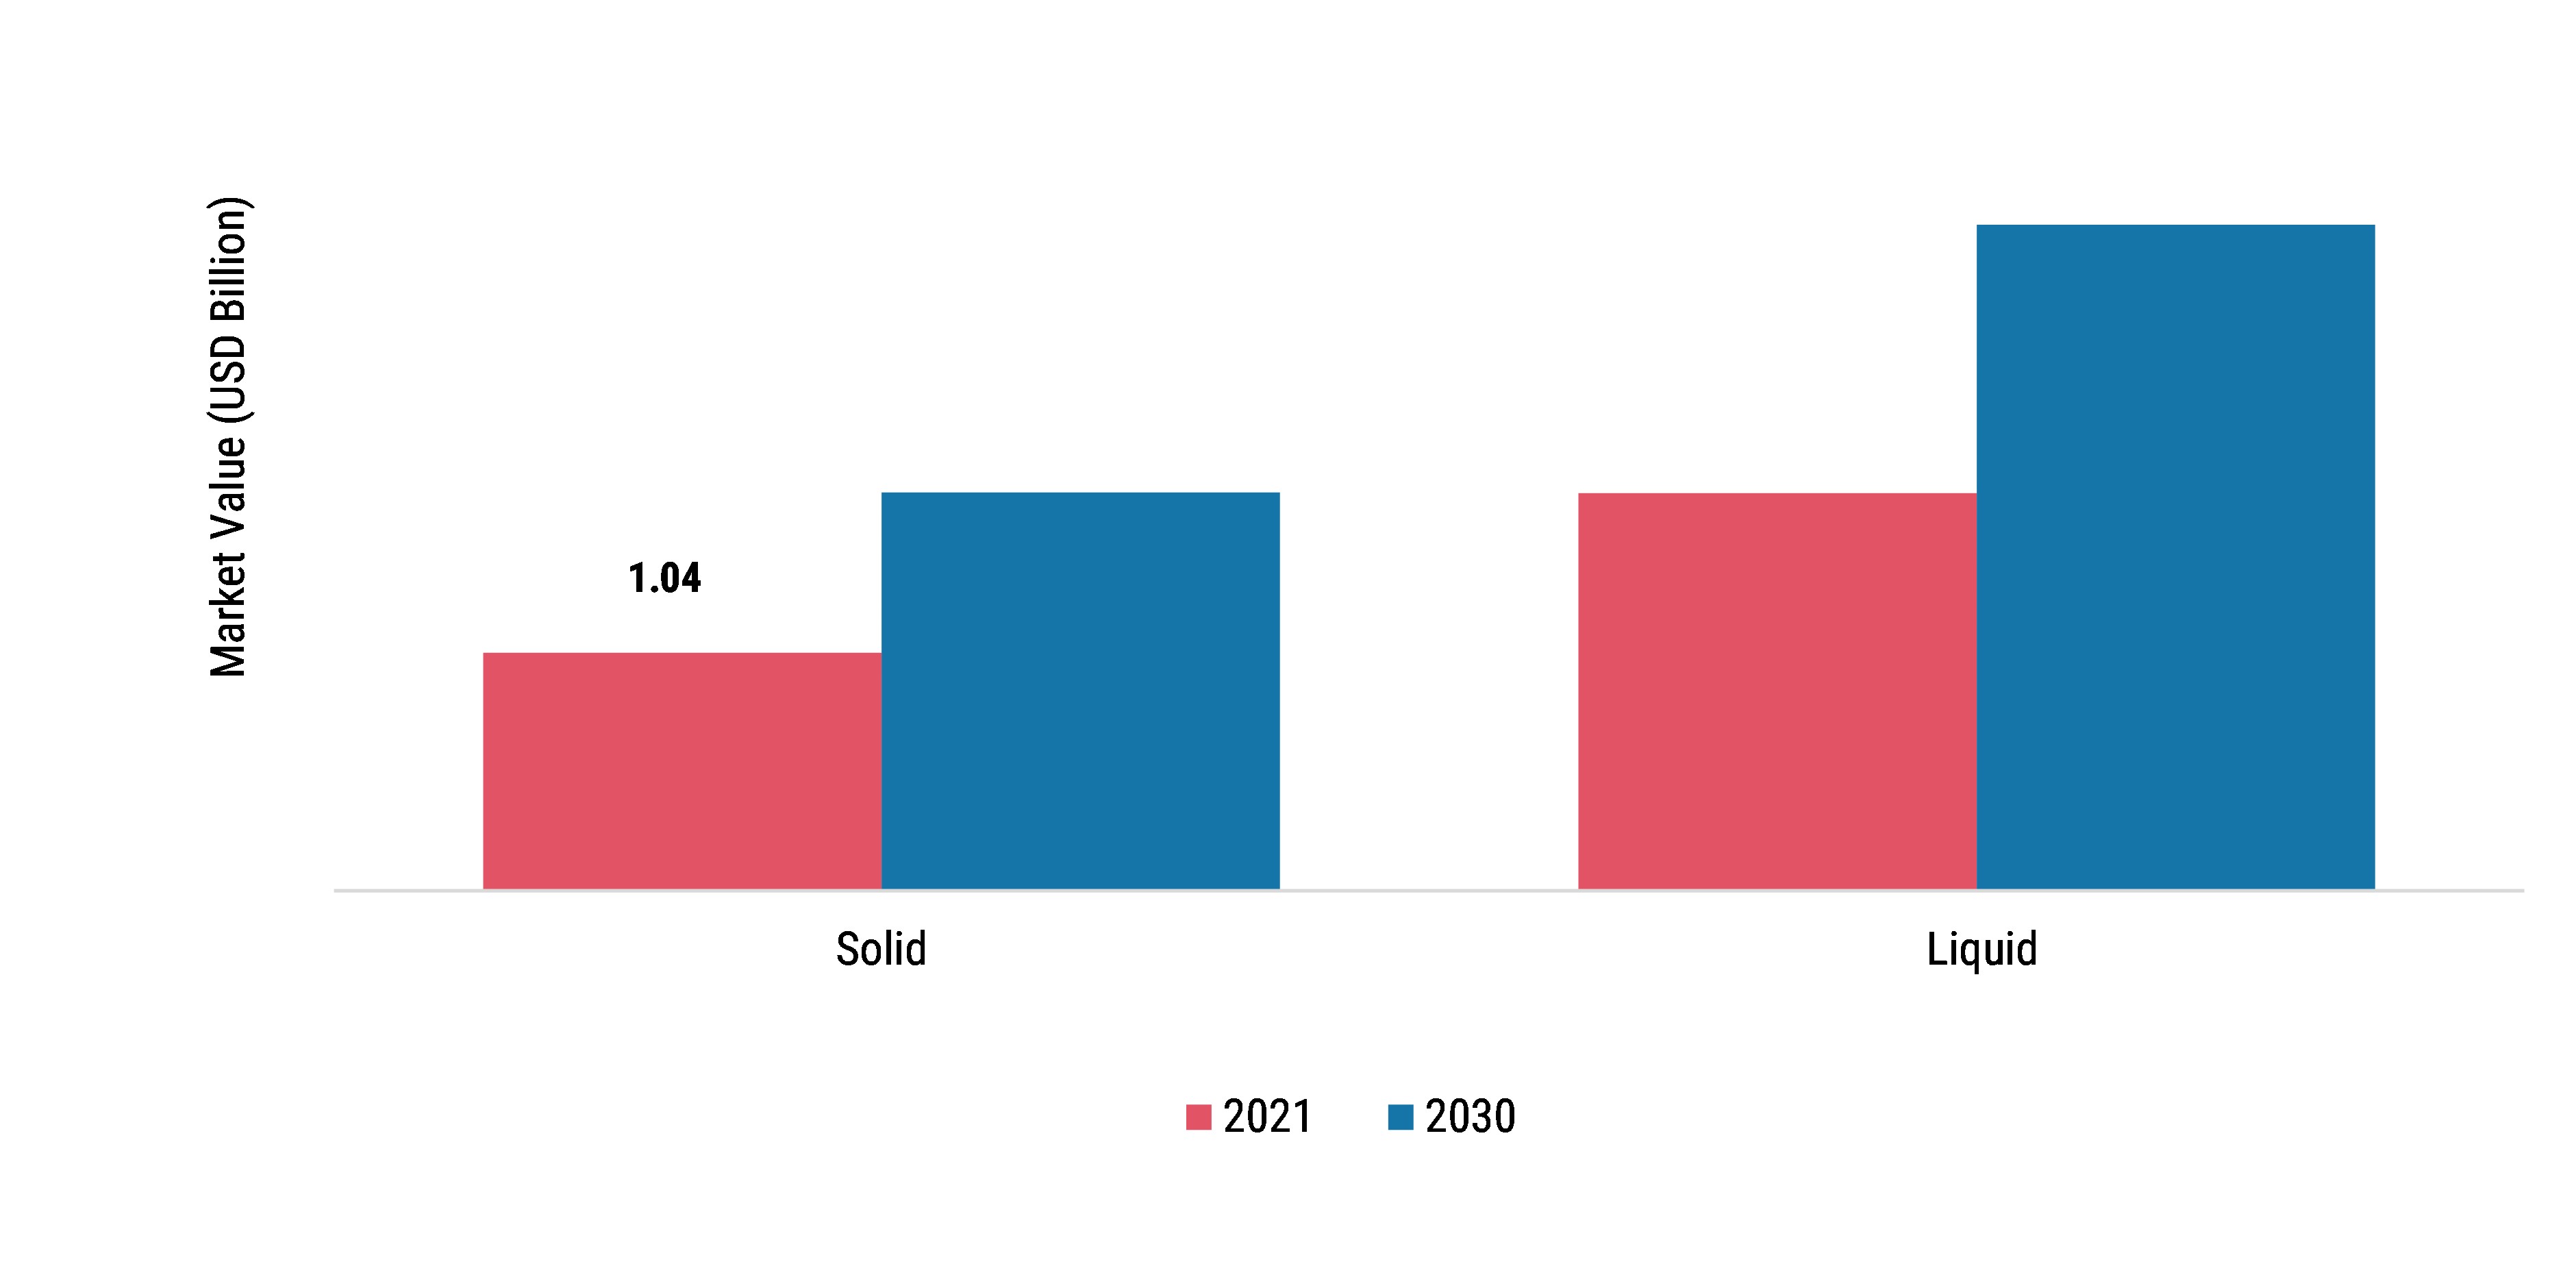 Ammonium Sulfate Market, by End-use, 2021 & 2030 (USD Billion)